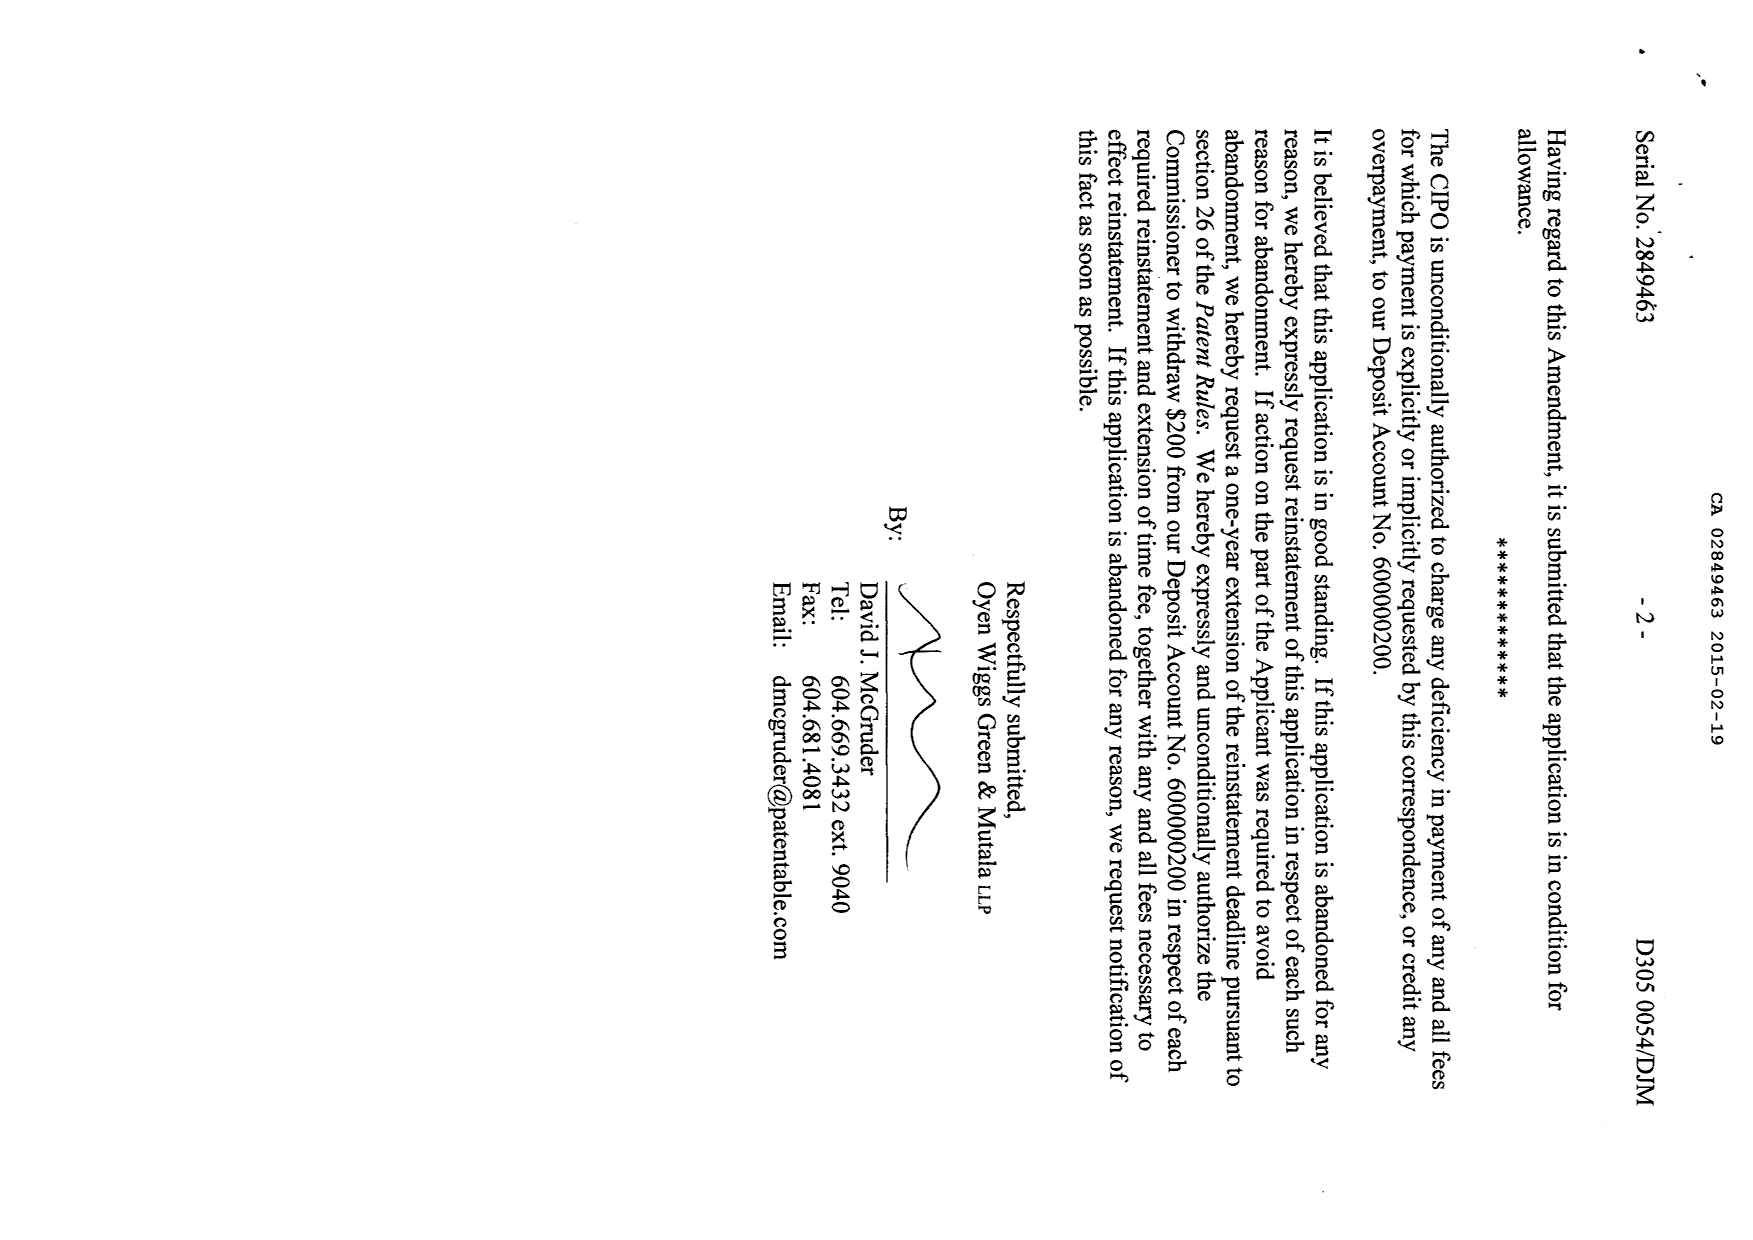 Canadian Patent Document 2849463. Prosecution-Amendment 20141219. Image 2 of 11